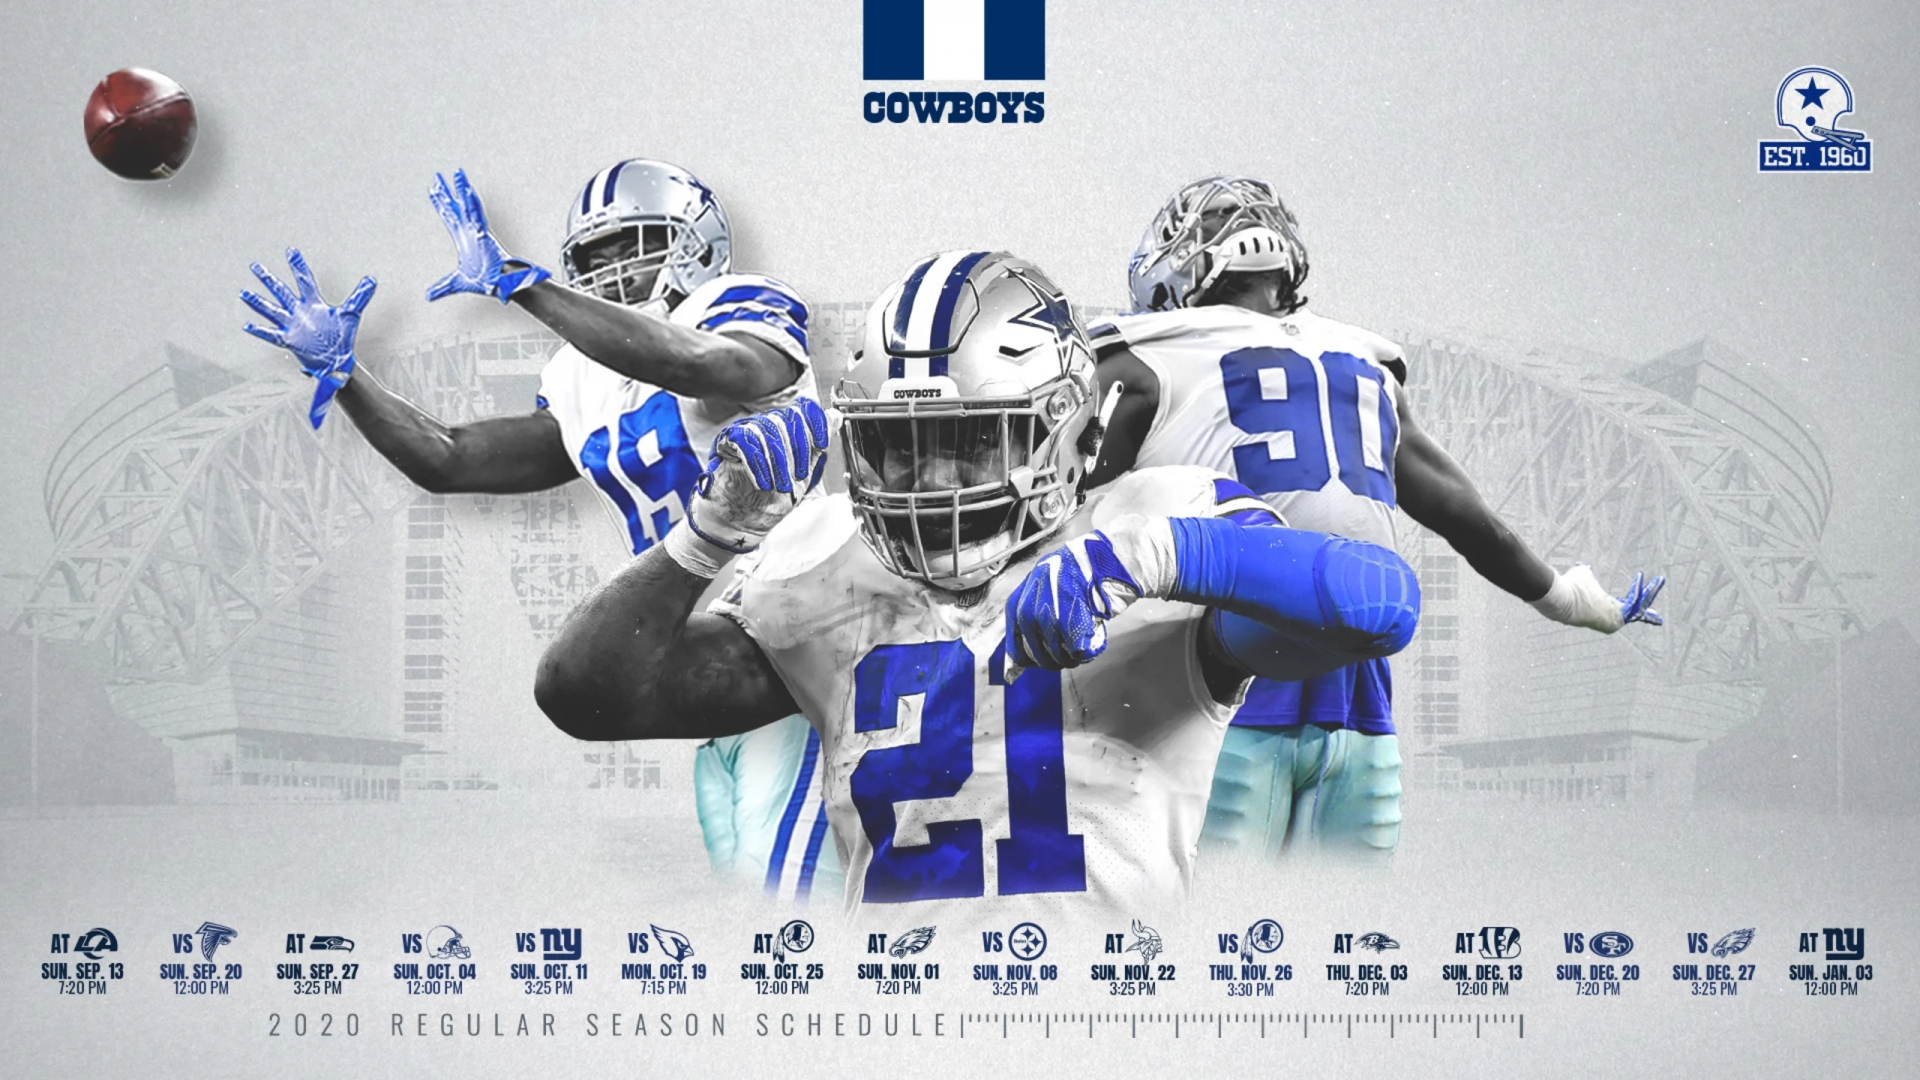 Dallas Cowboys 2020 official schedule released, position rebuilt